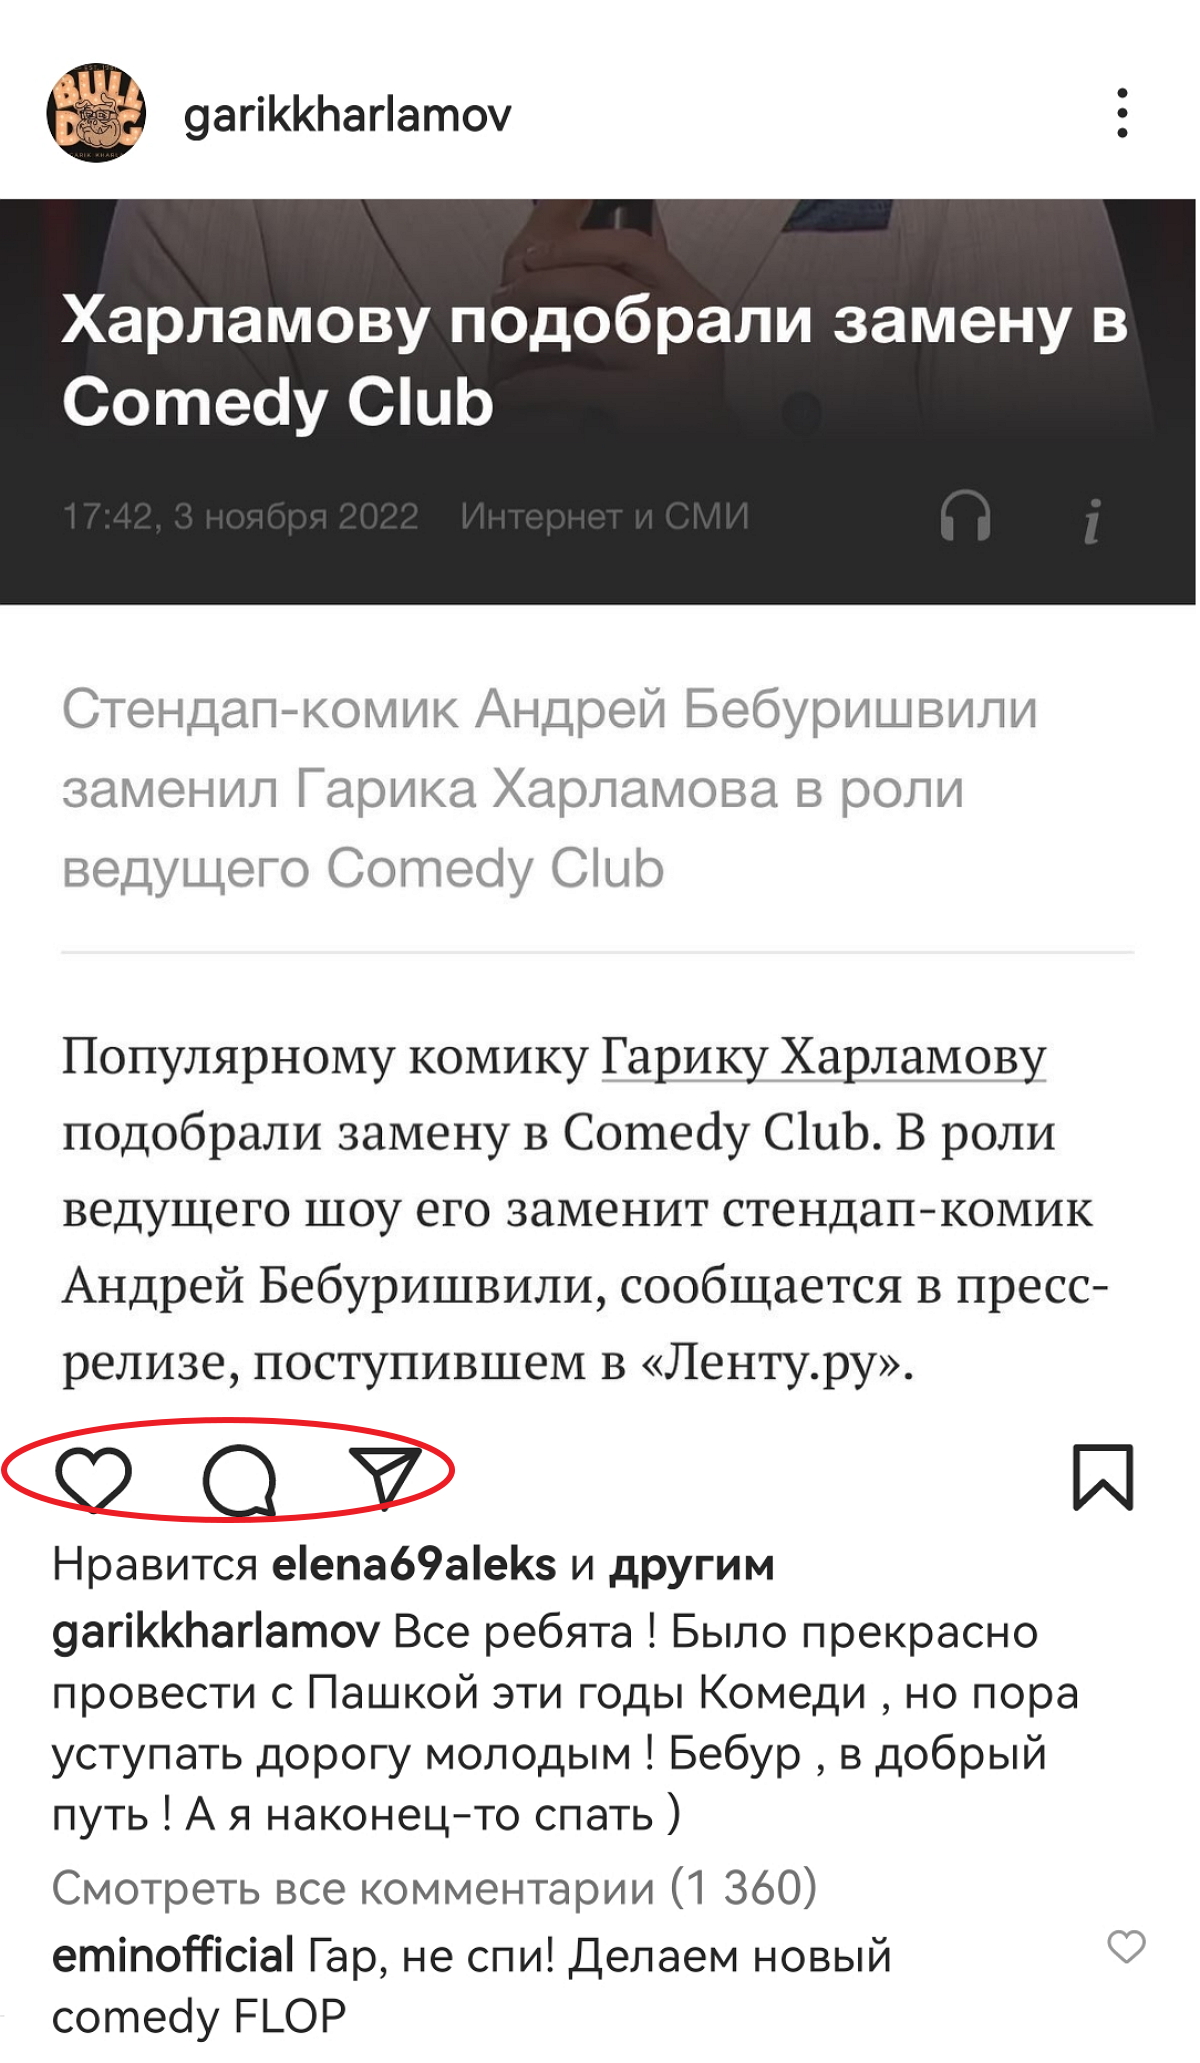 Гарик Харламов объявил об уходе из Comedy Club (ФОТО)